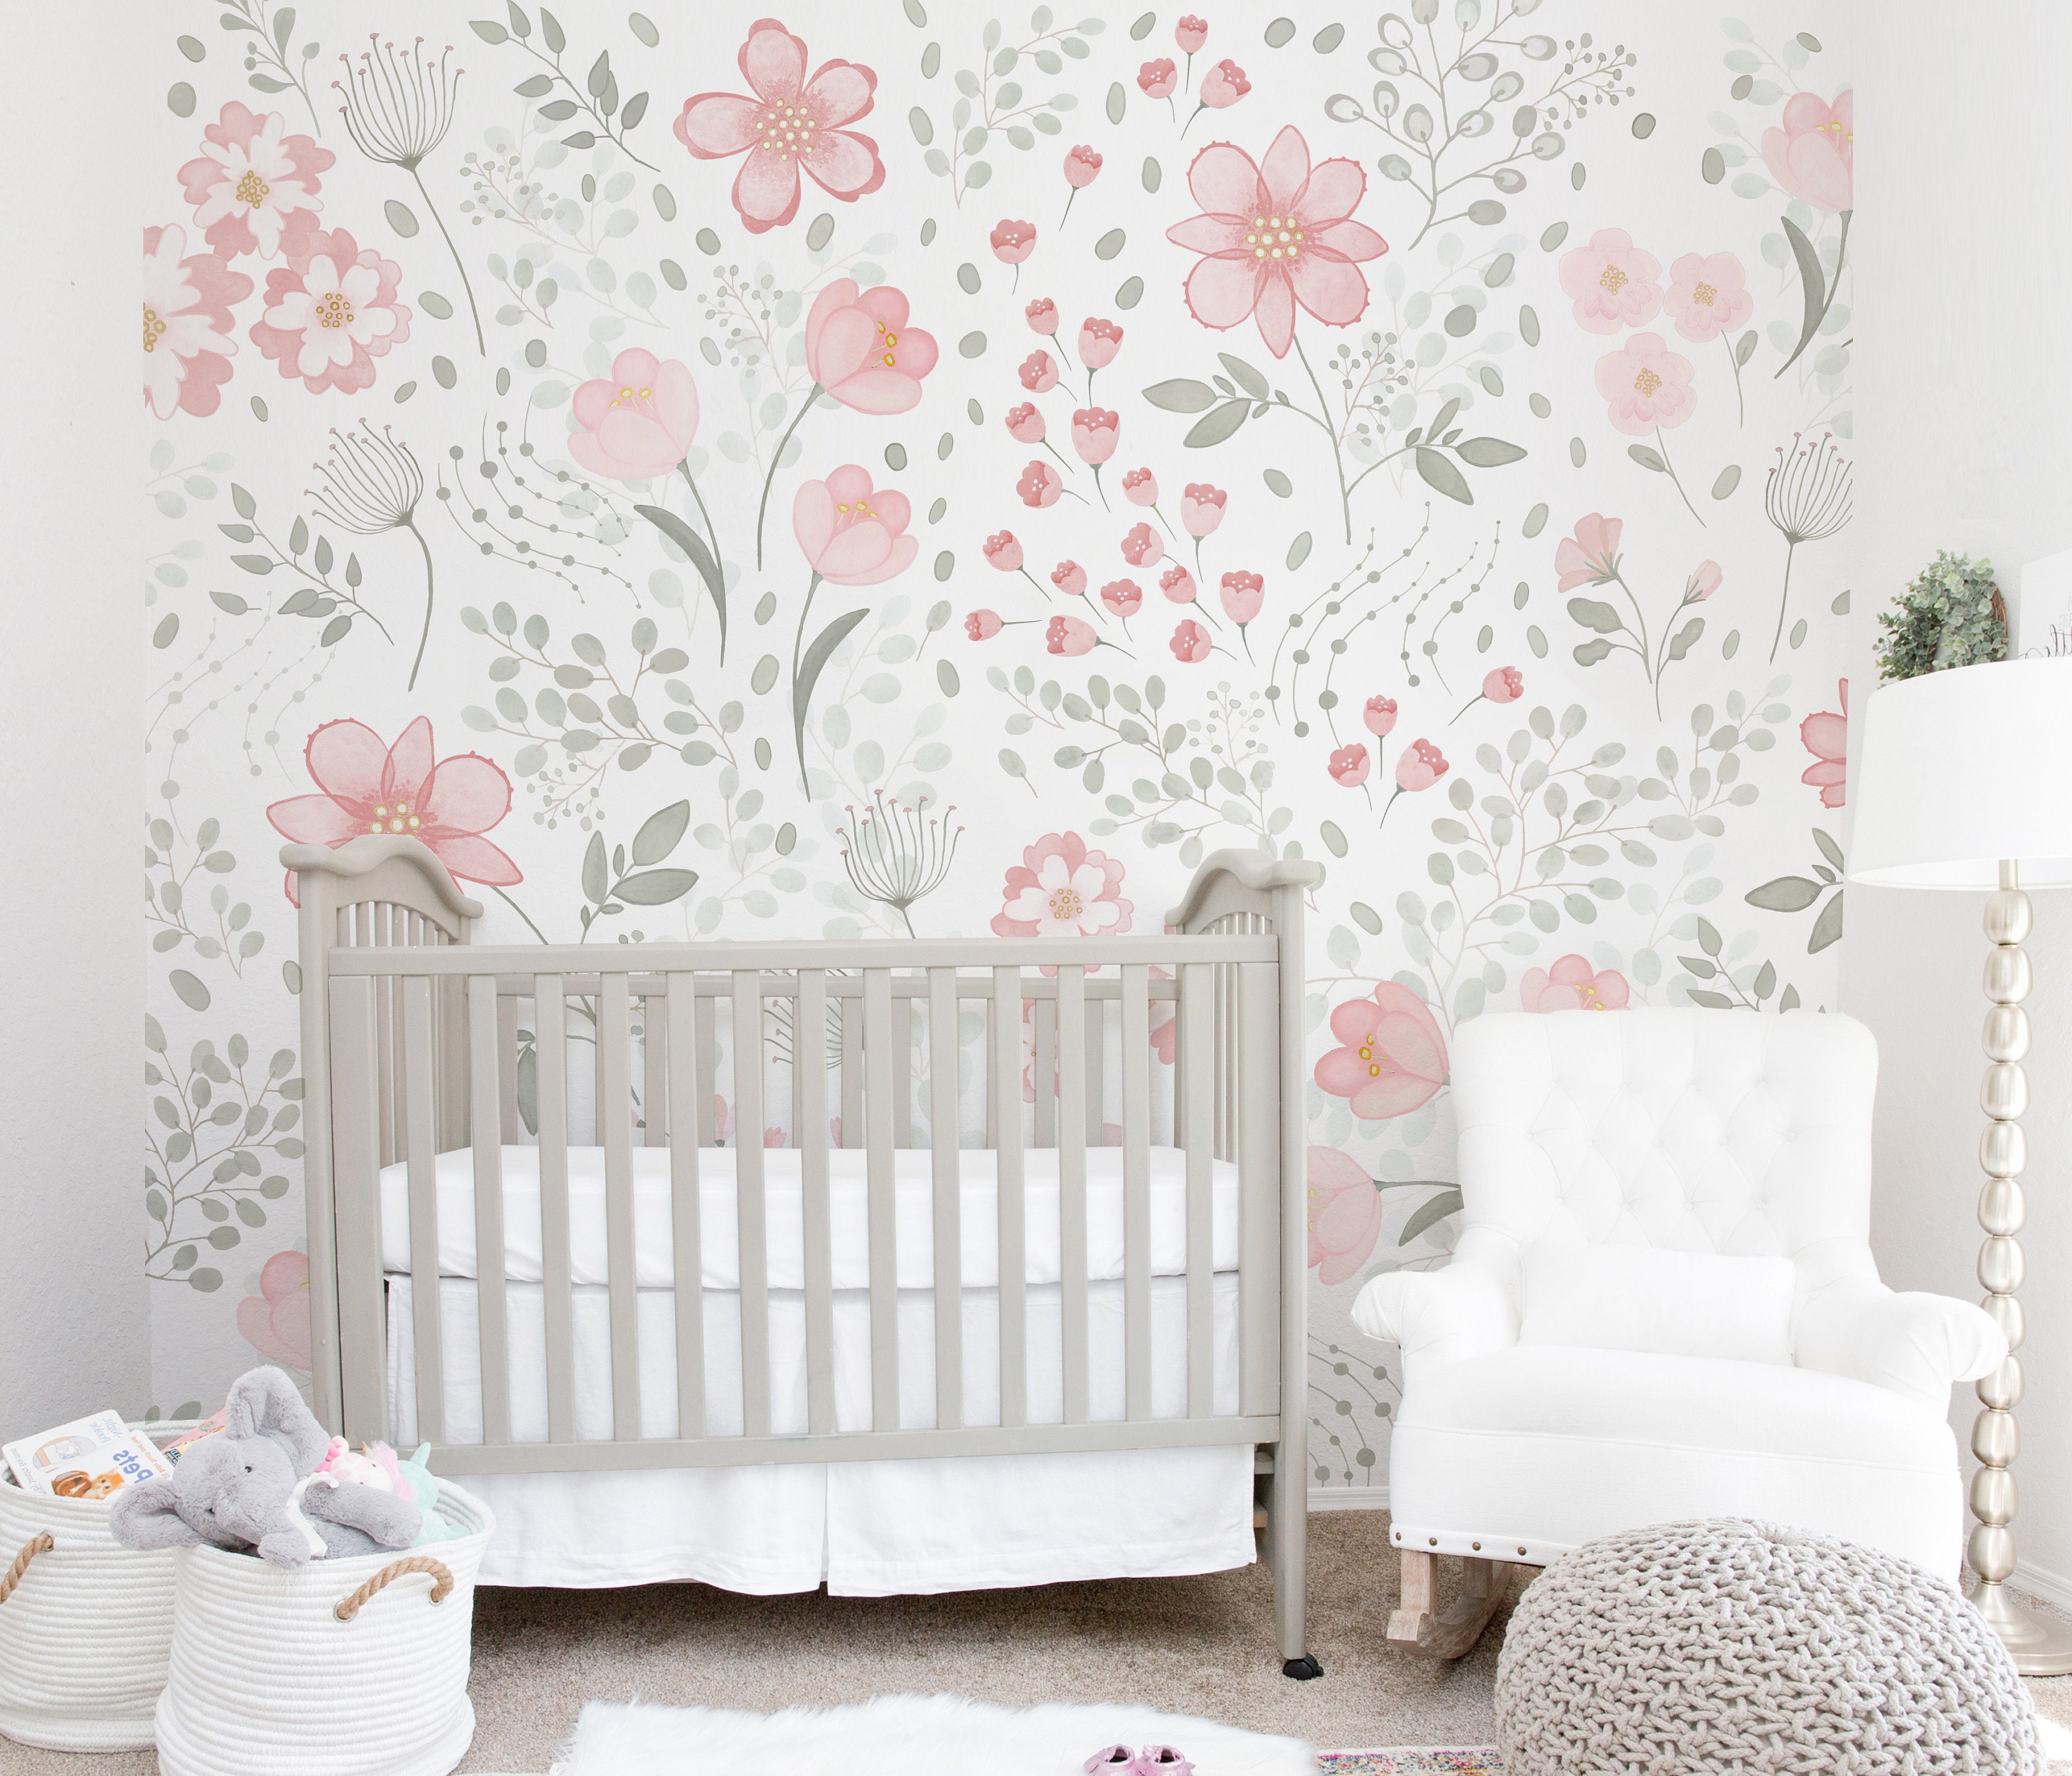 Self Adhesive Wallpaper for Nursery or Girl's Room Non Toxic Peel & Stick Wallpaper Floral Repositionable Mural Wallpaper Vinyl Free